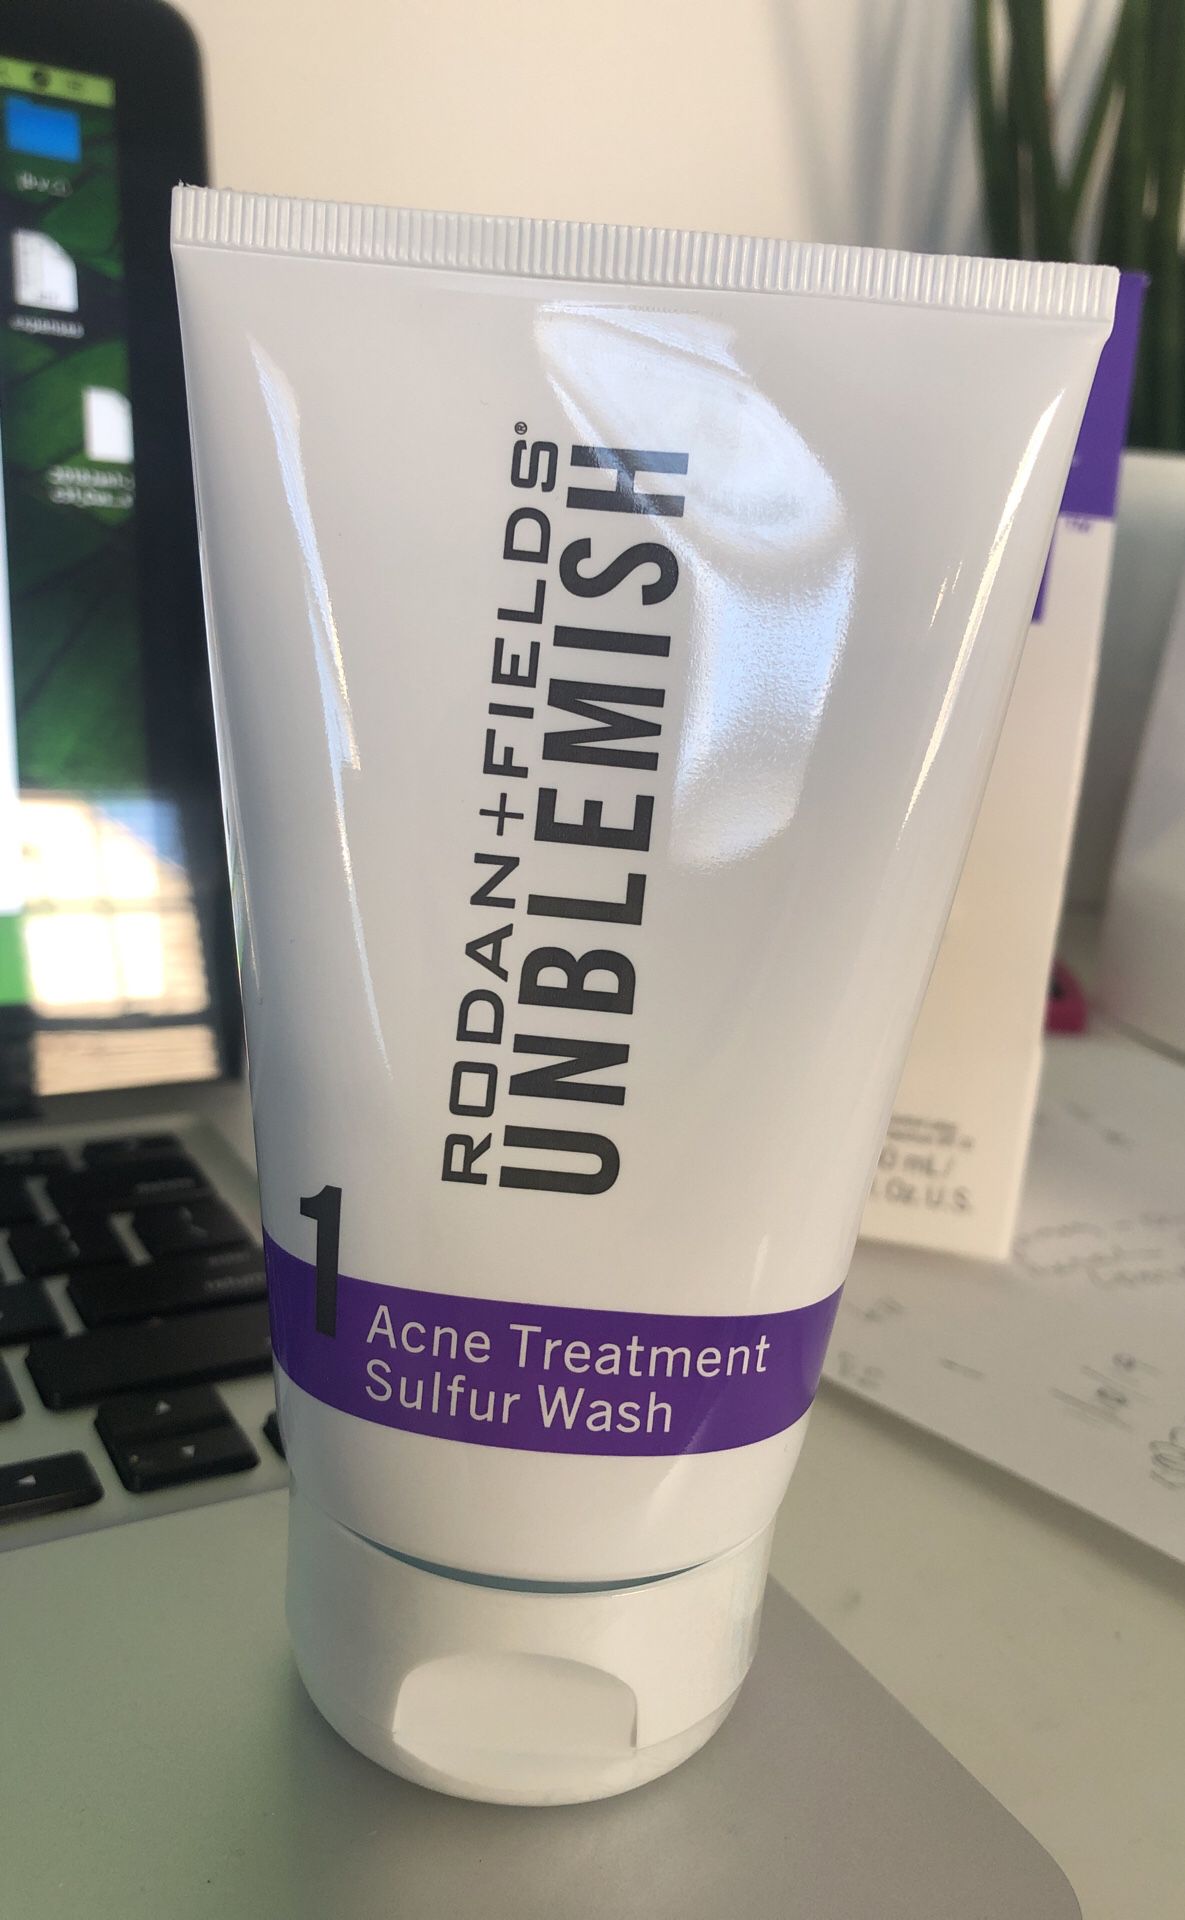 Rodan and fields unblemish acne treatment sulfur wash